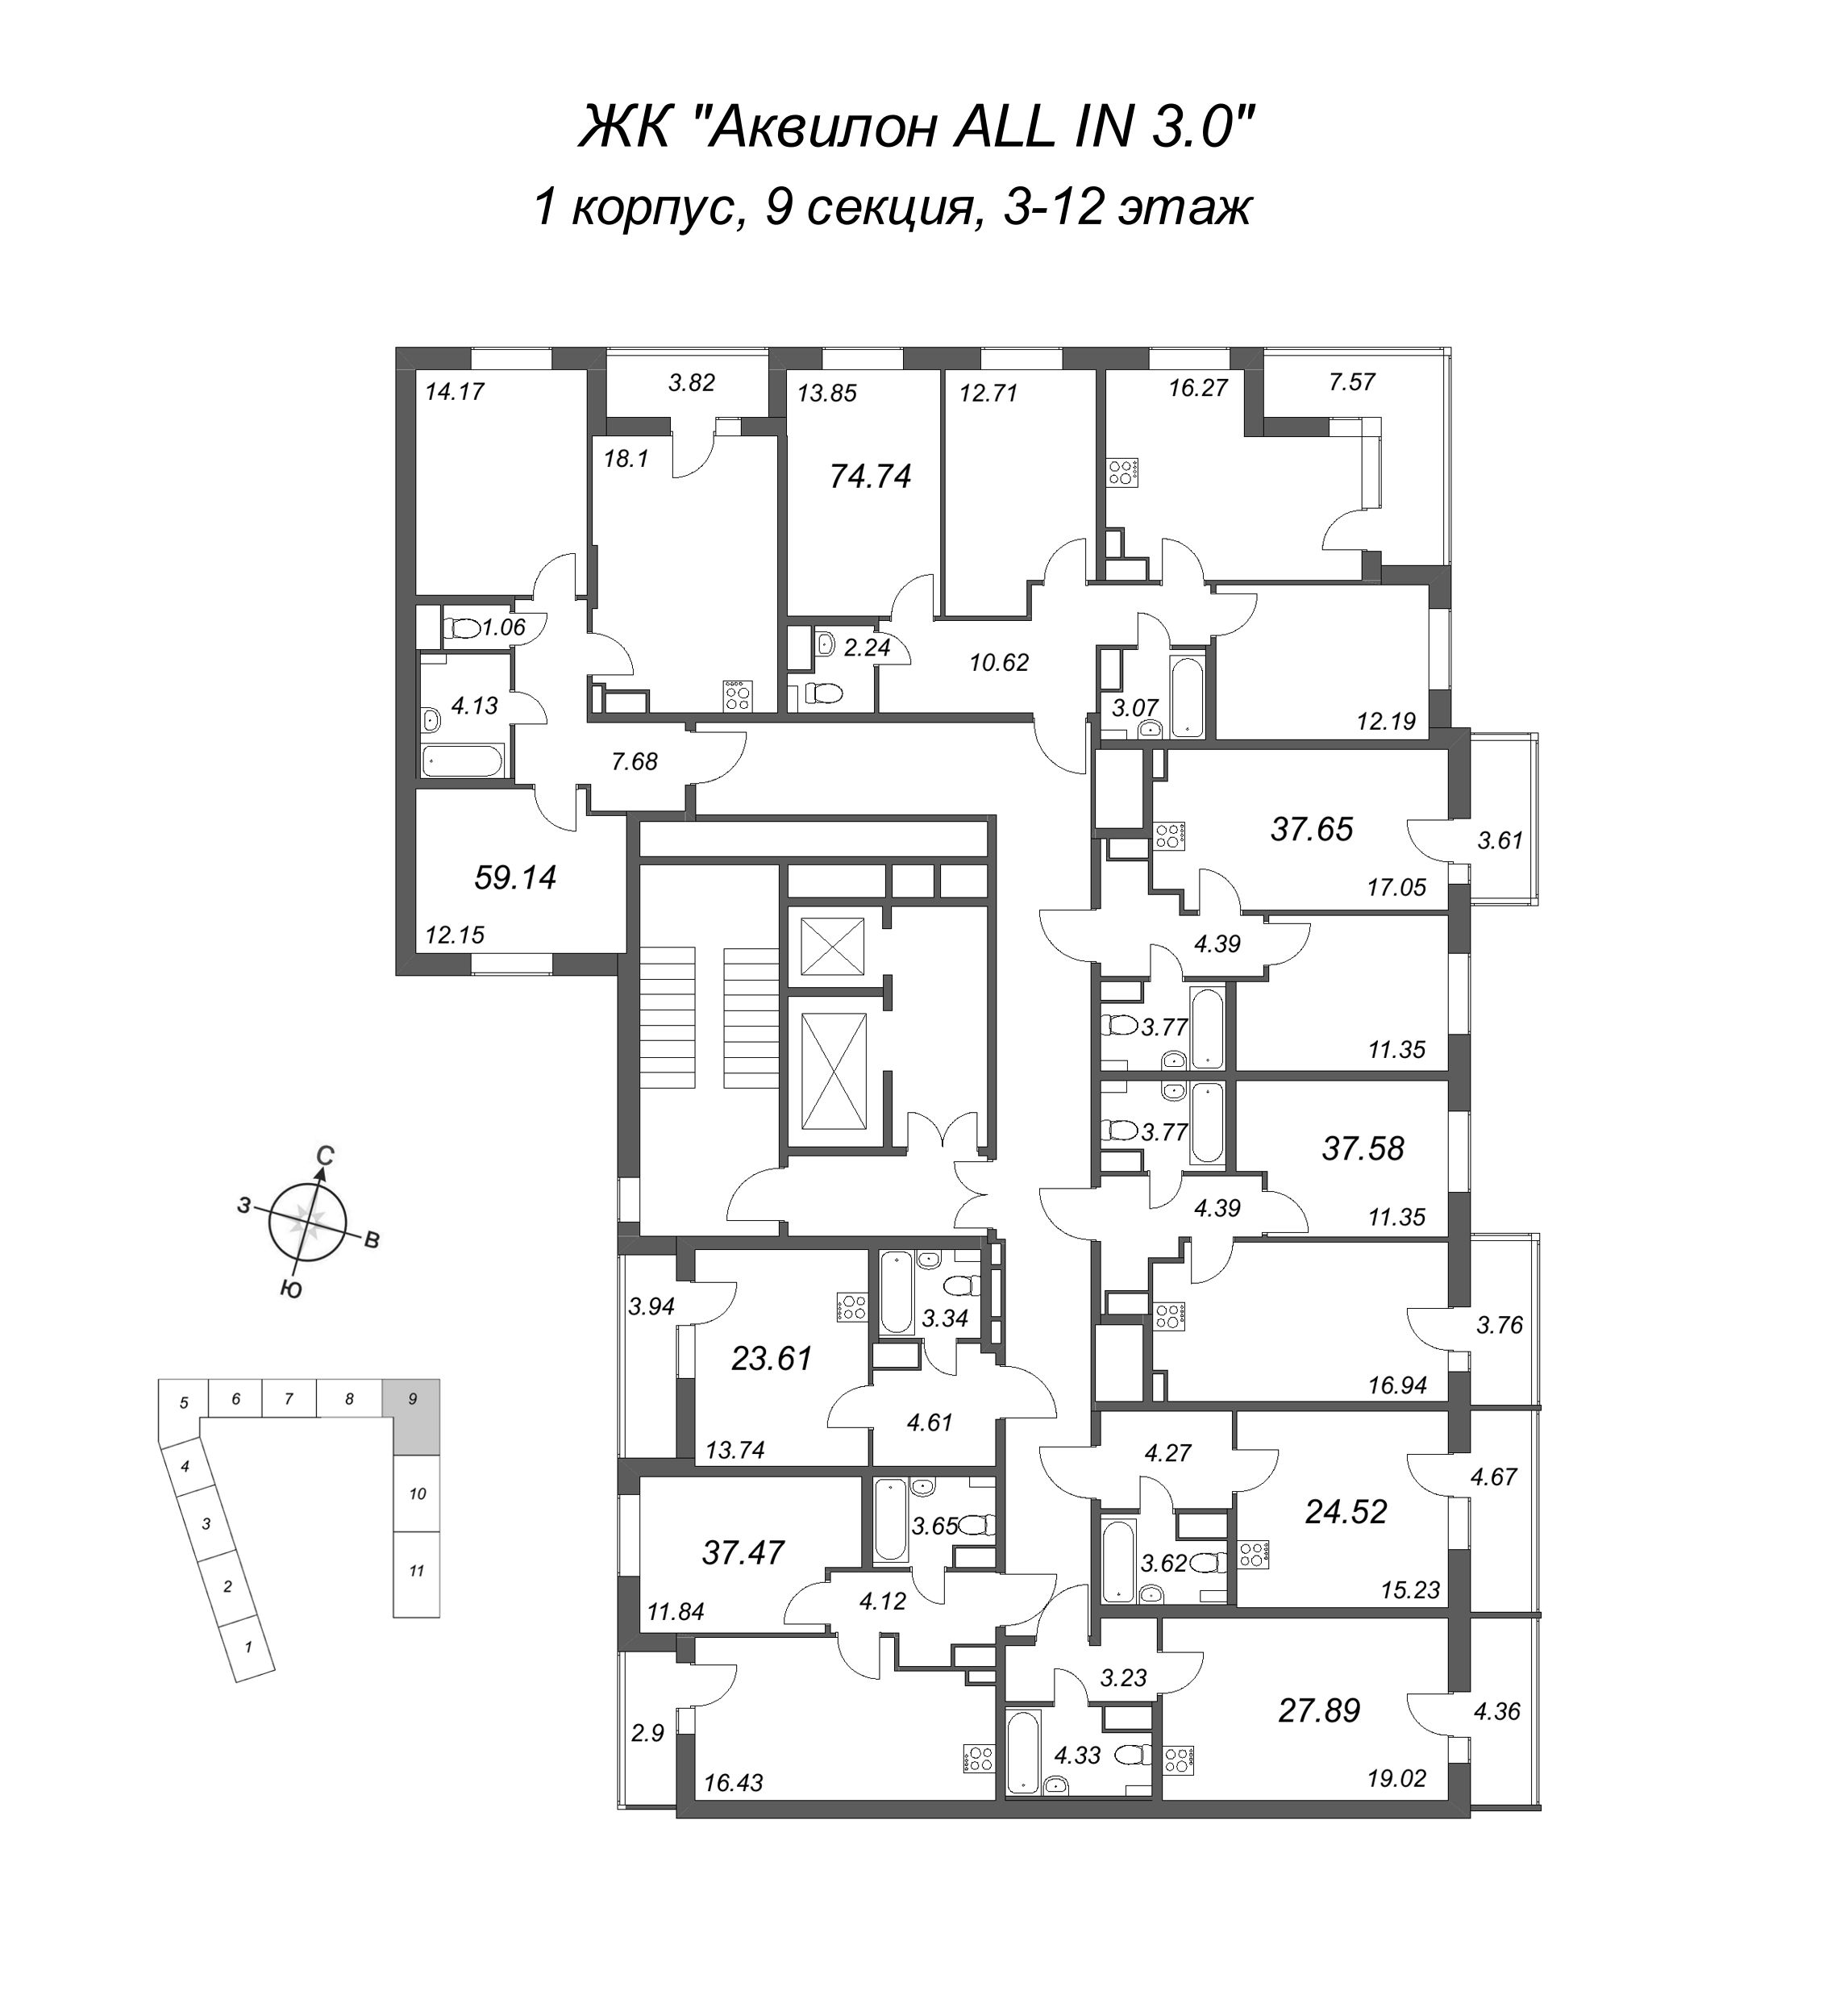 2-комнатная (Евро) квартира, 37.58 м² - планировка этажа